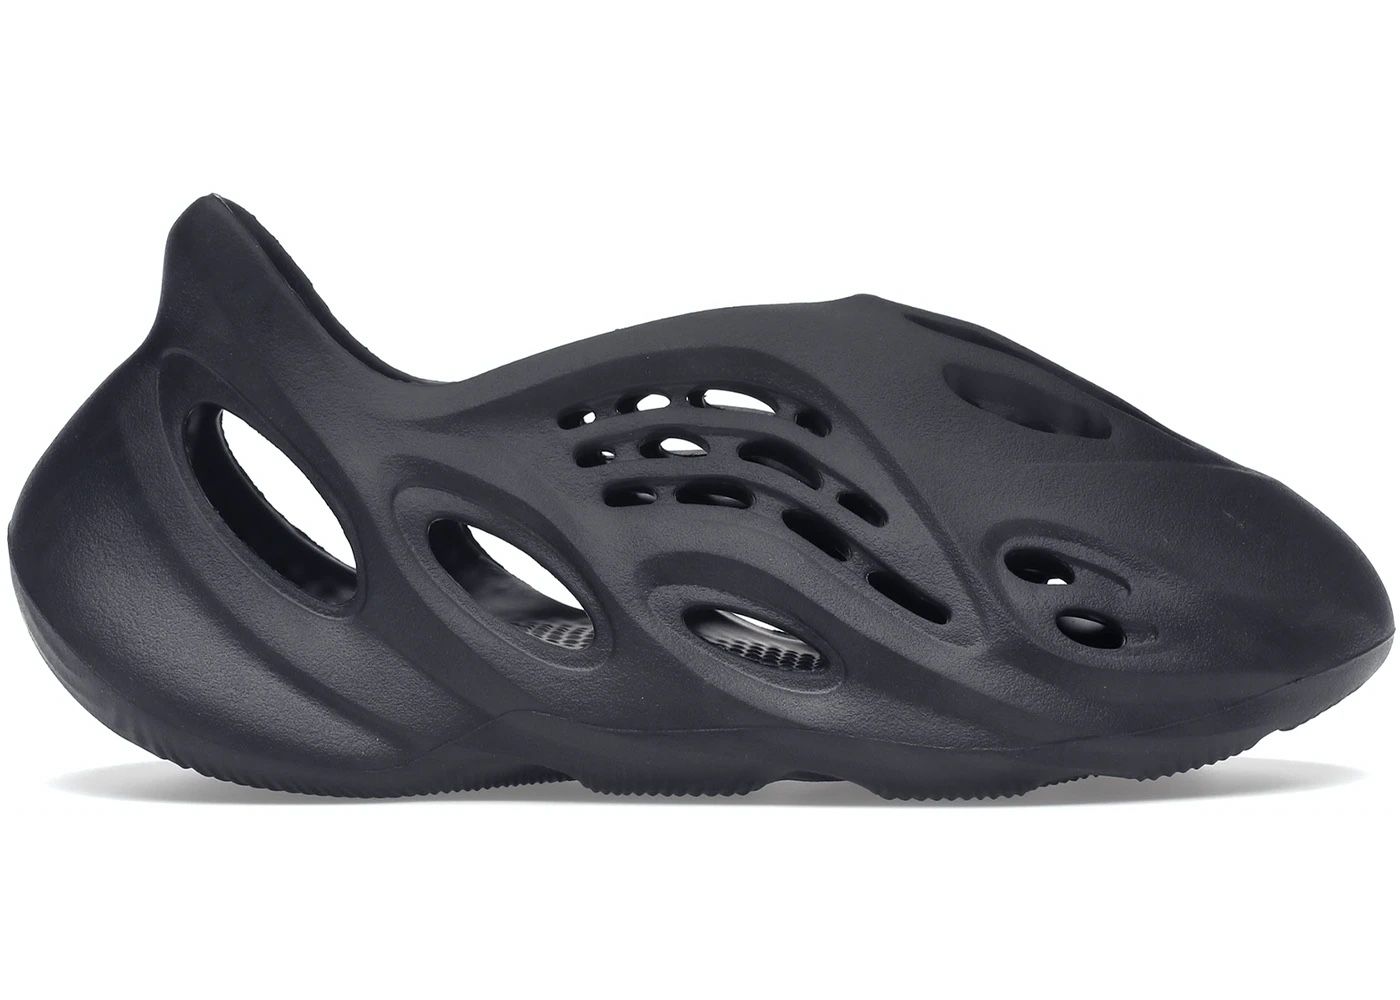 Adidas Yeezy Foam Runner Onyx - Size 12